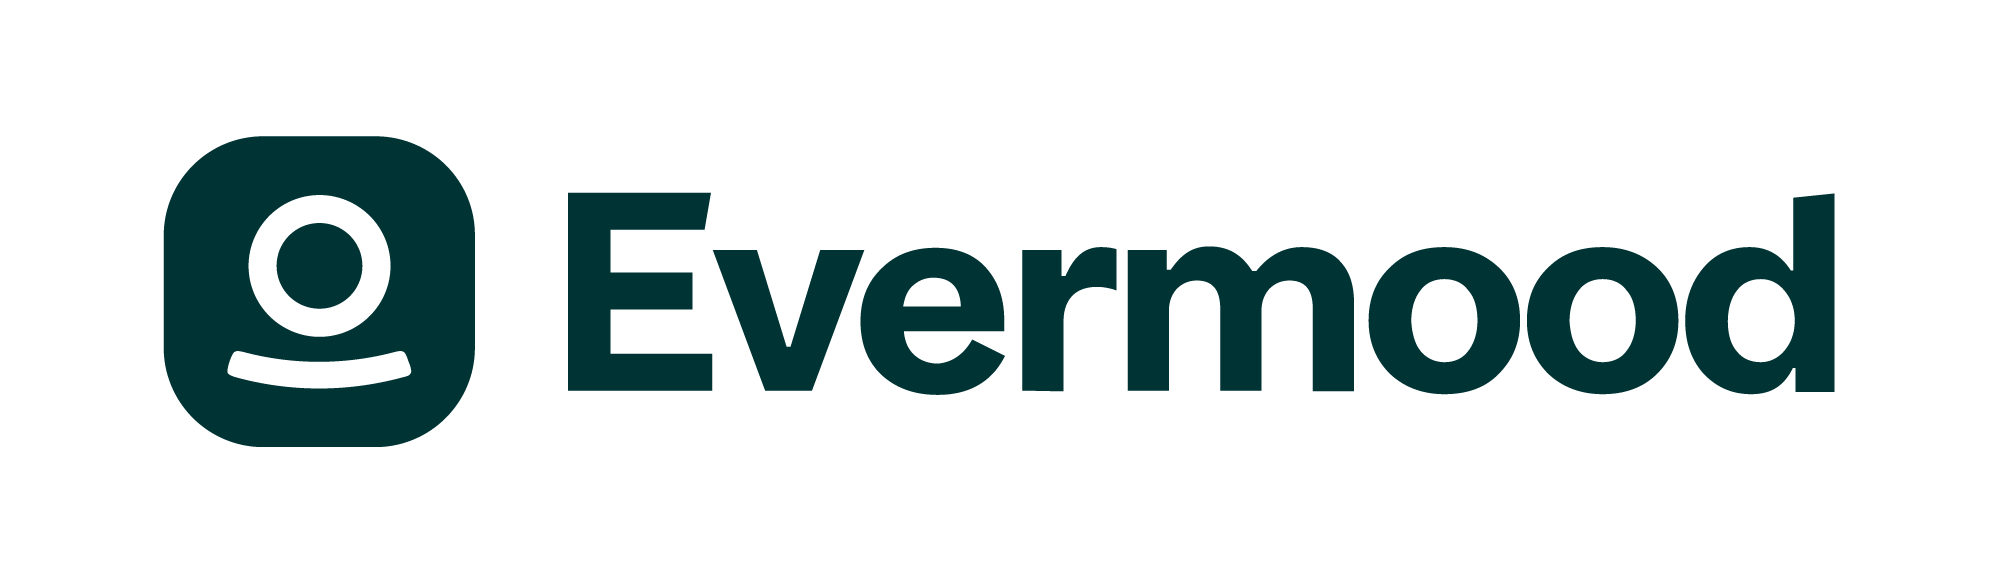 Evermood Logo